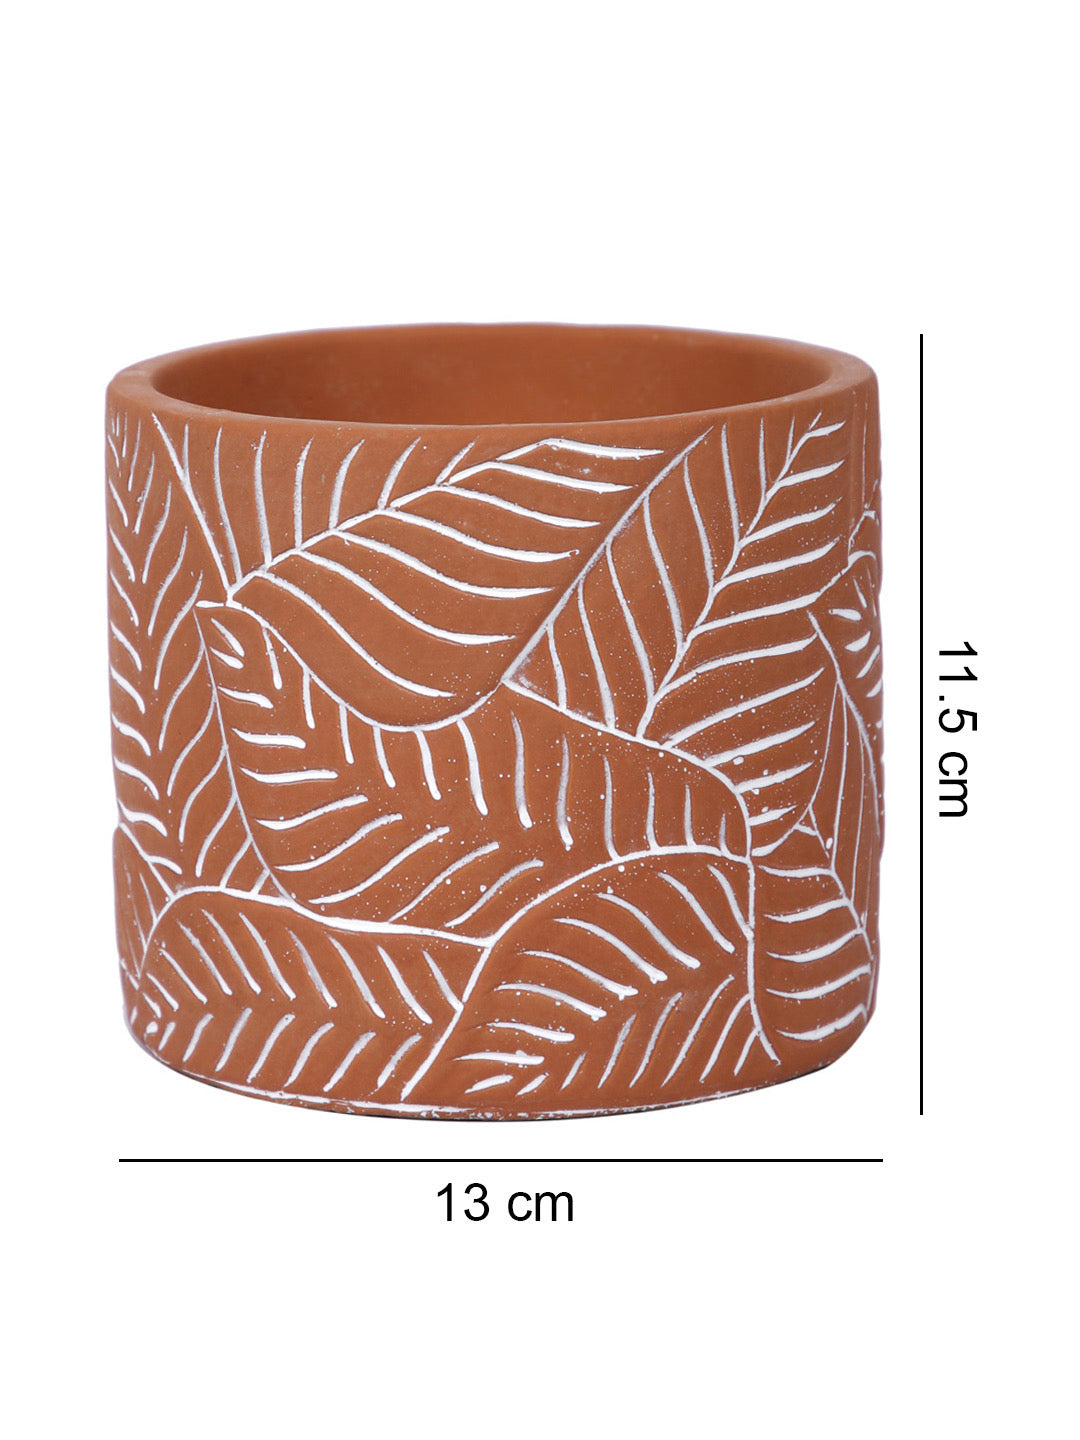 Textured Leaf Pattern Planter - Default Title (CHC22353OR)